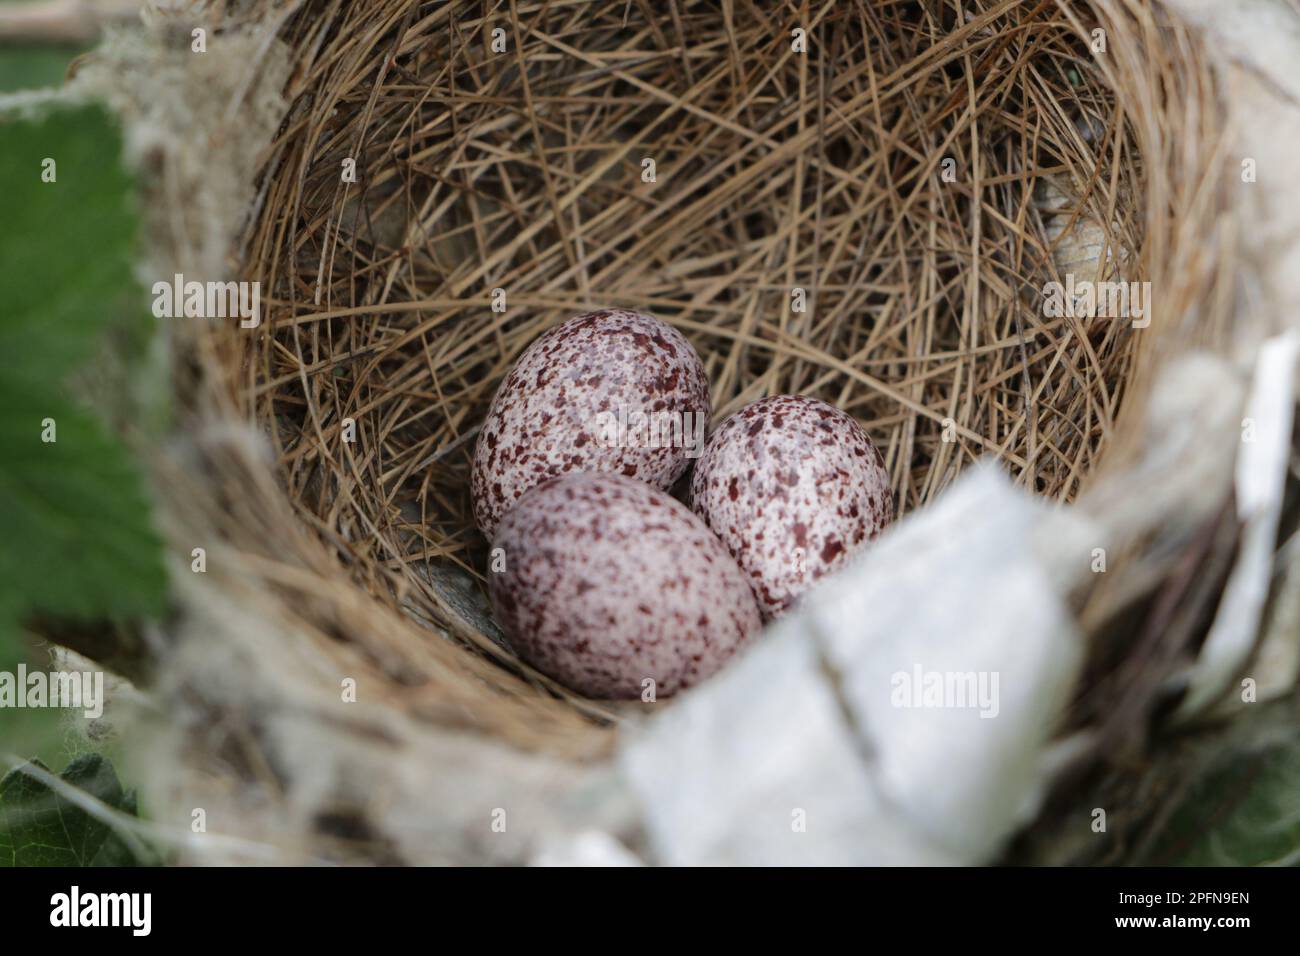 Bird's nest in natural habitat. Stock Photo